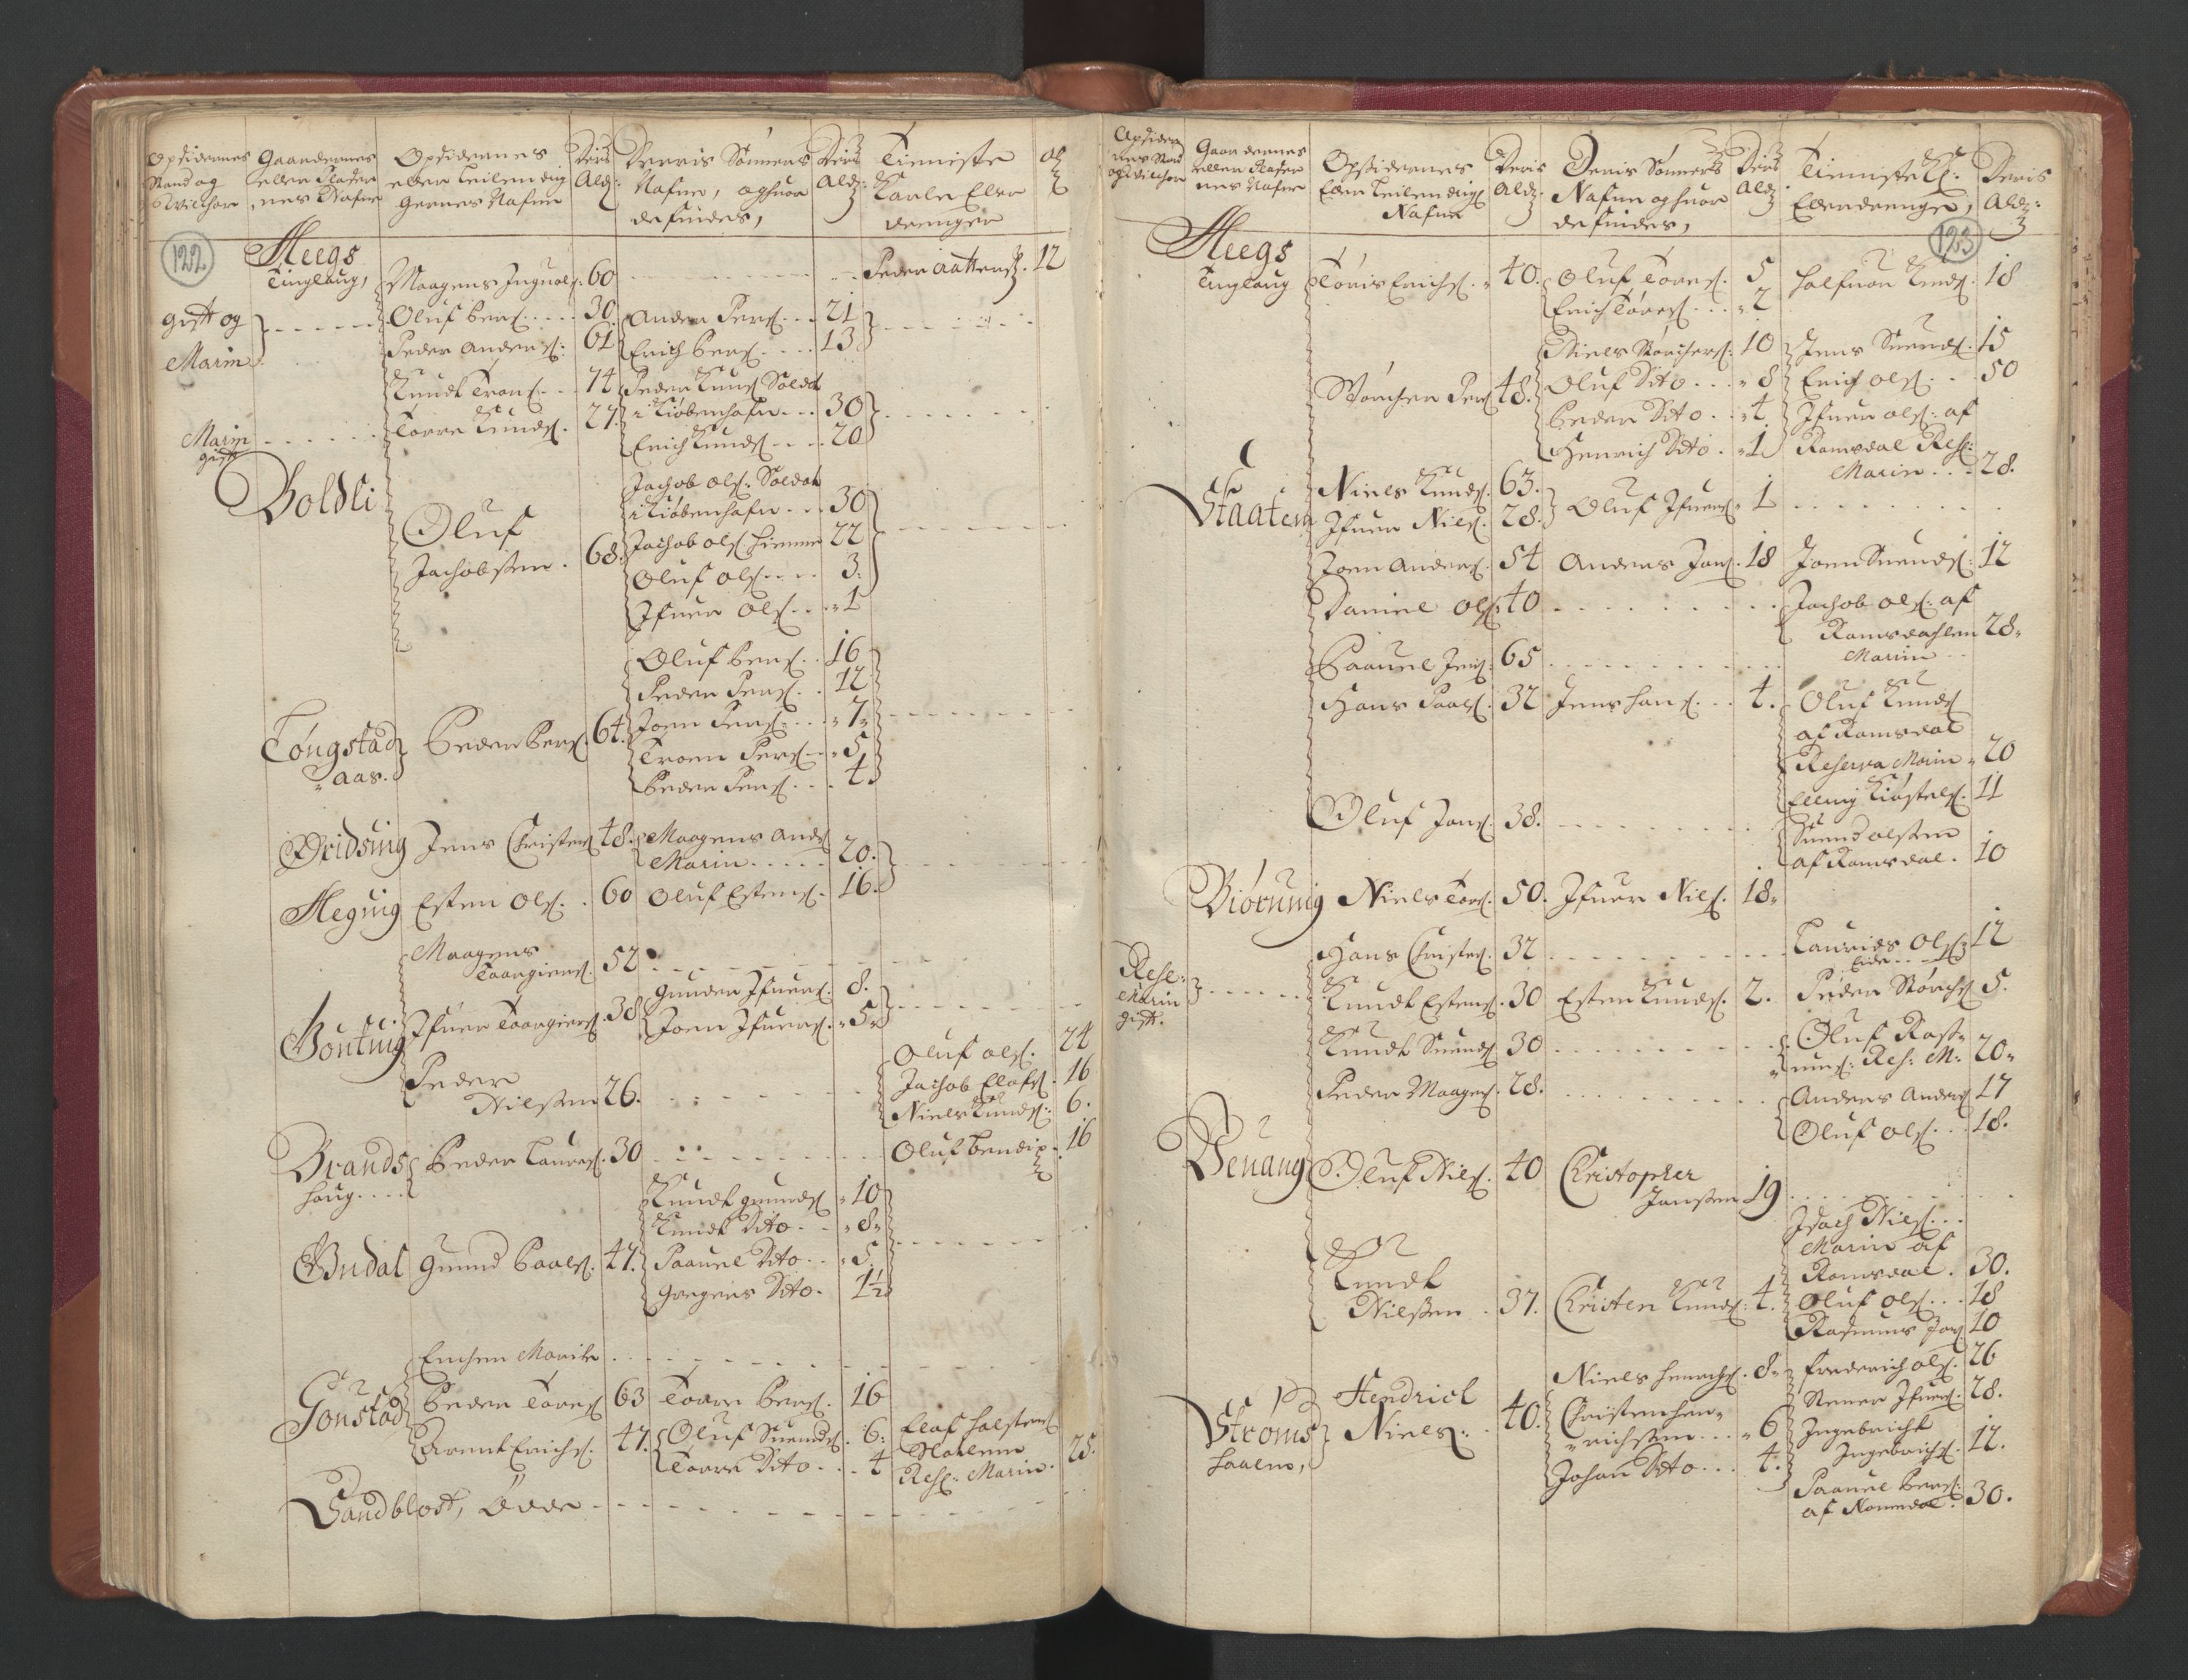 RA, Manntallet 1701, nr. 11: Nordmøre fogderi og Romsdal fogderi, 1701, s. 122-123